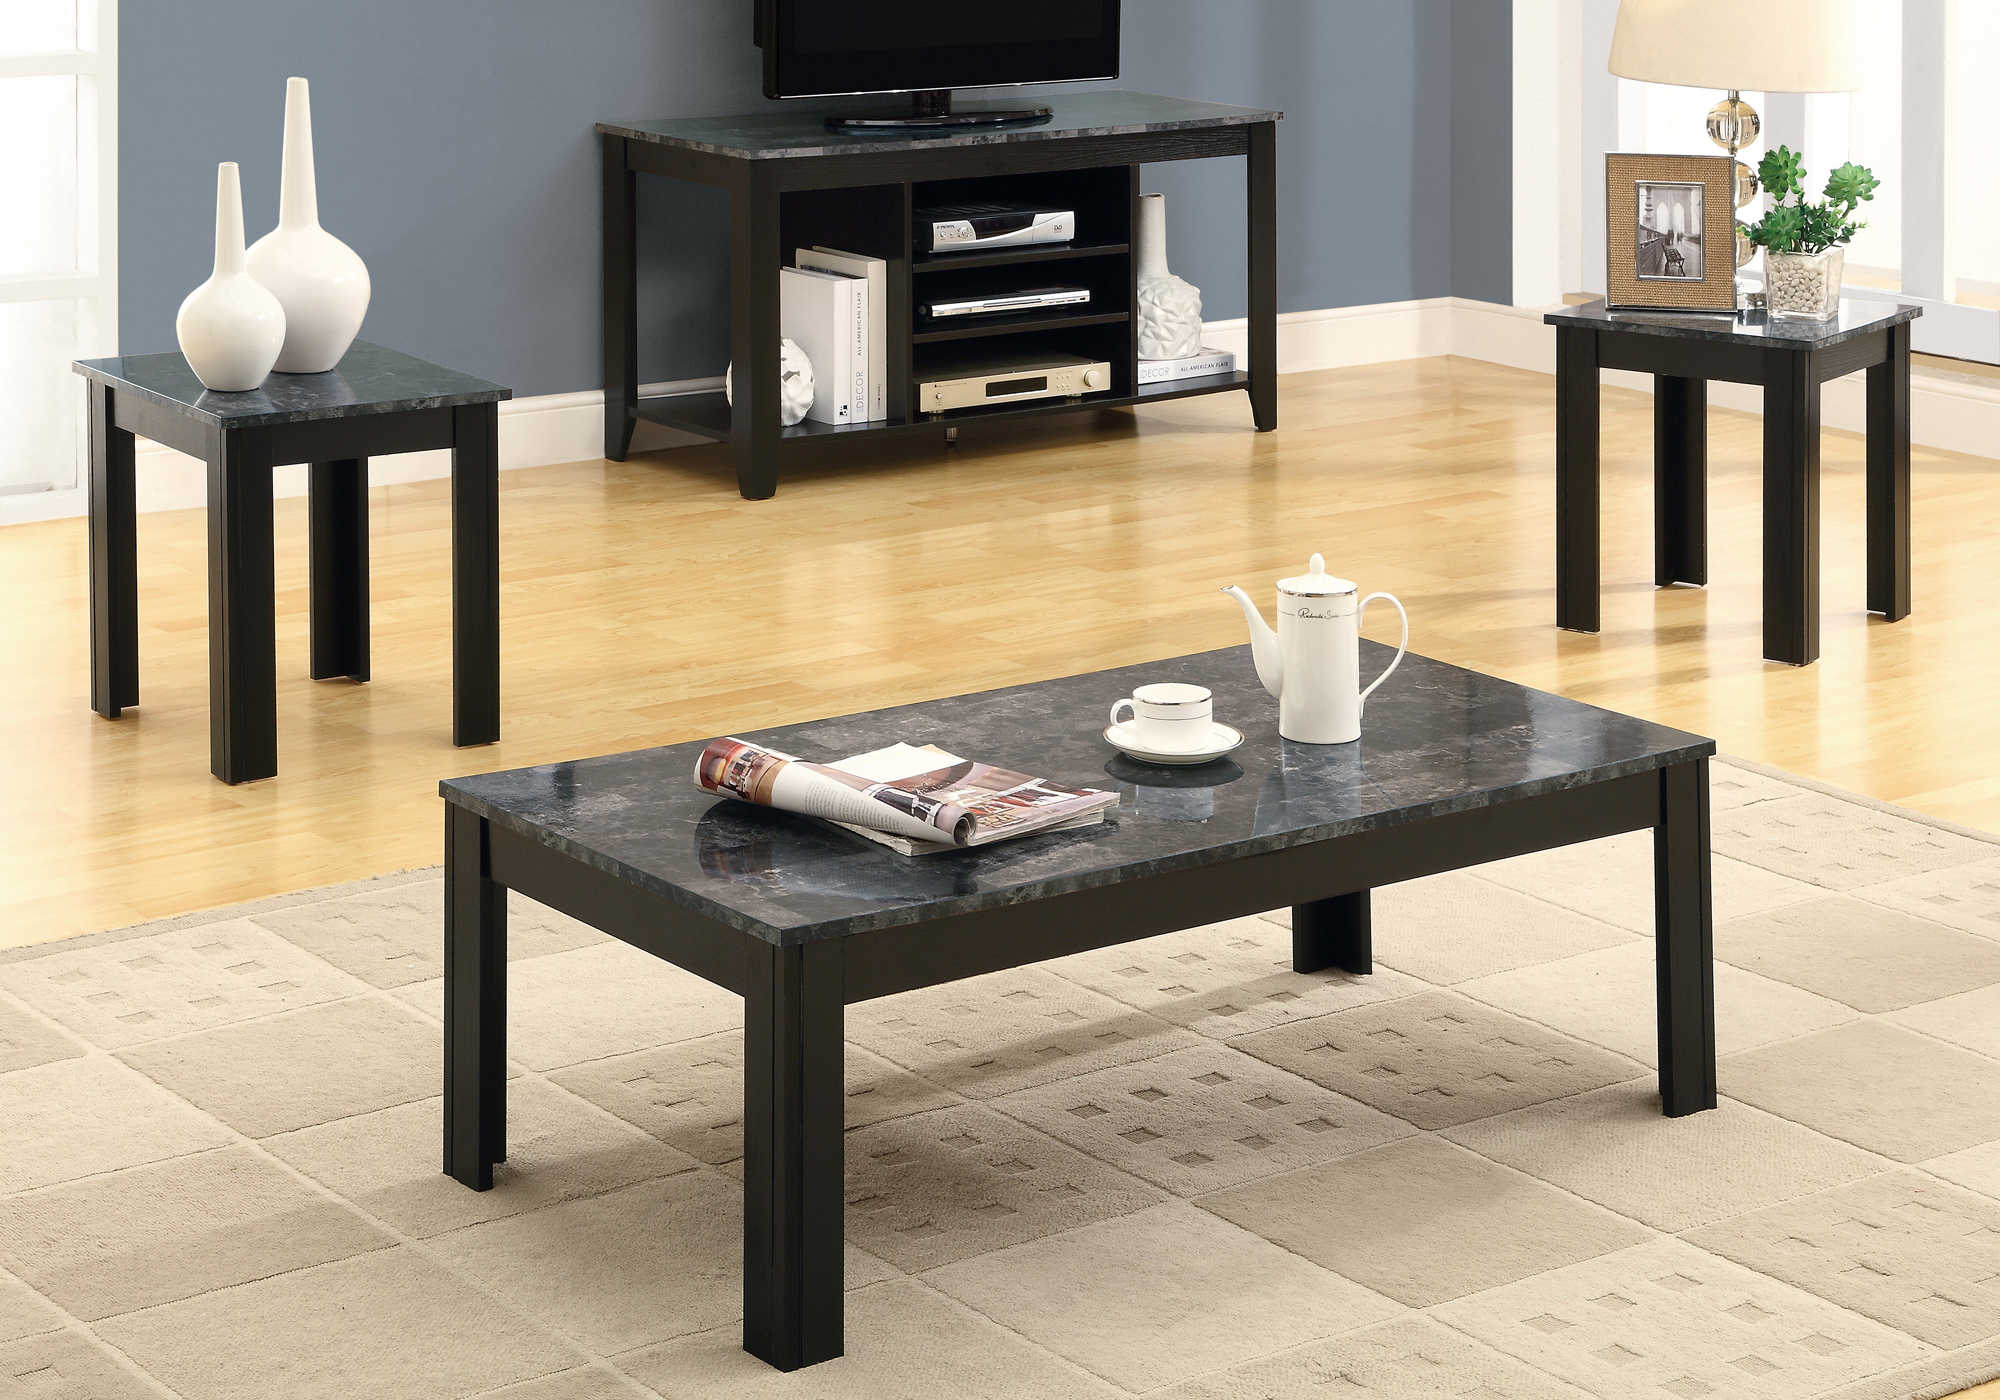 TABLE SET - 3PCS SET / BLACK / GREY MARBLE-LOOK TOP